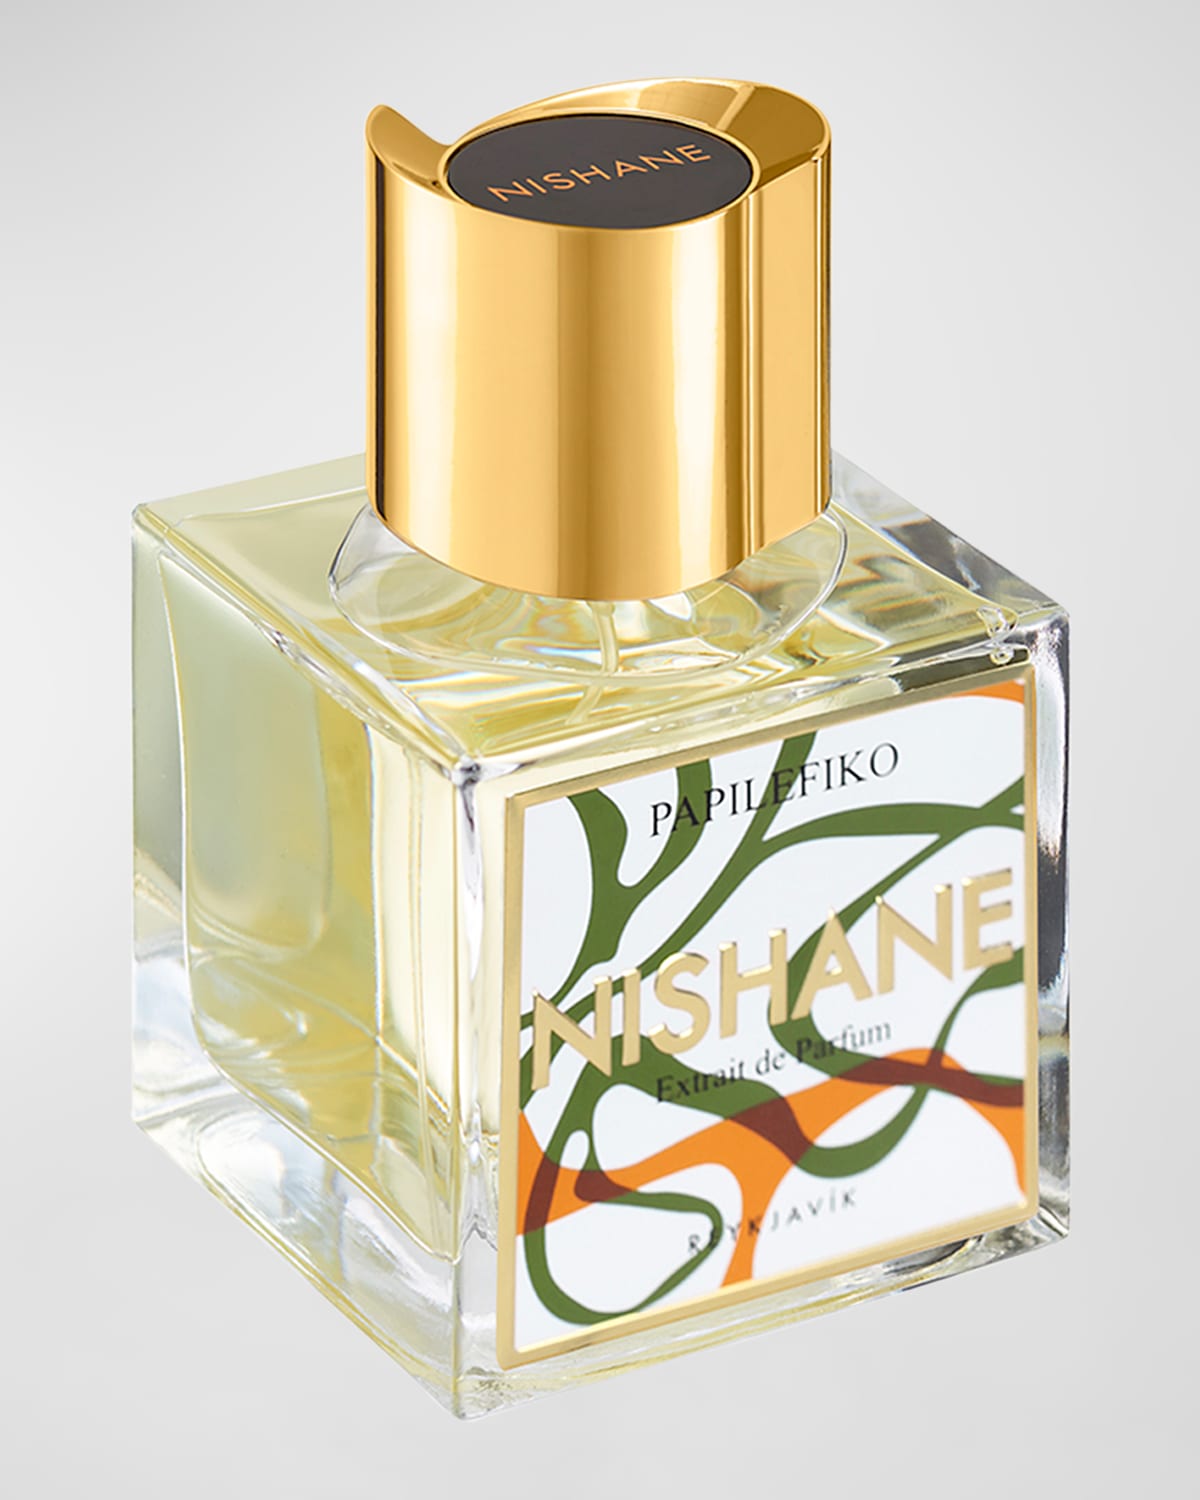 Shop Nishane Papilefiko Extrait De Parfum, 3.4 Oz.